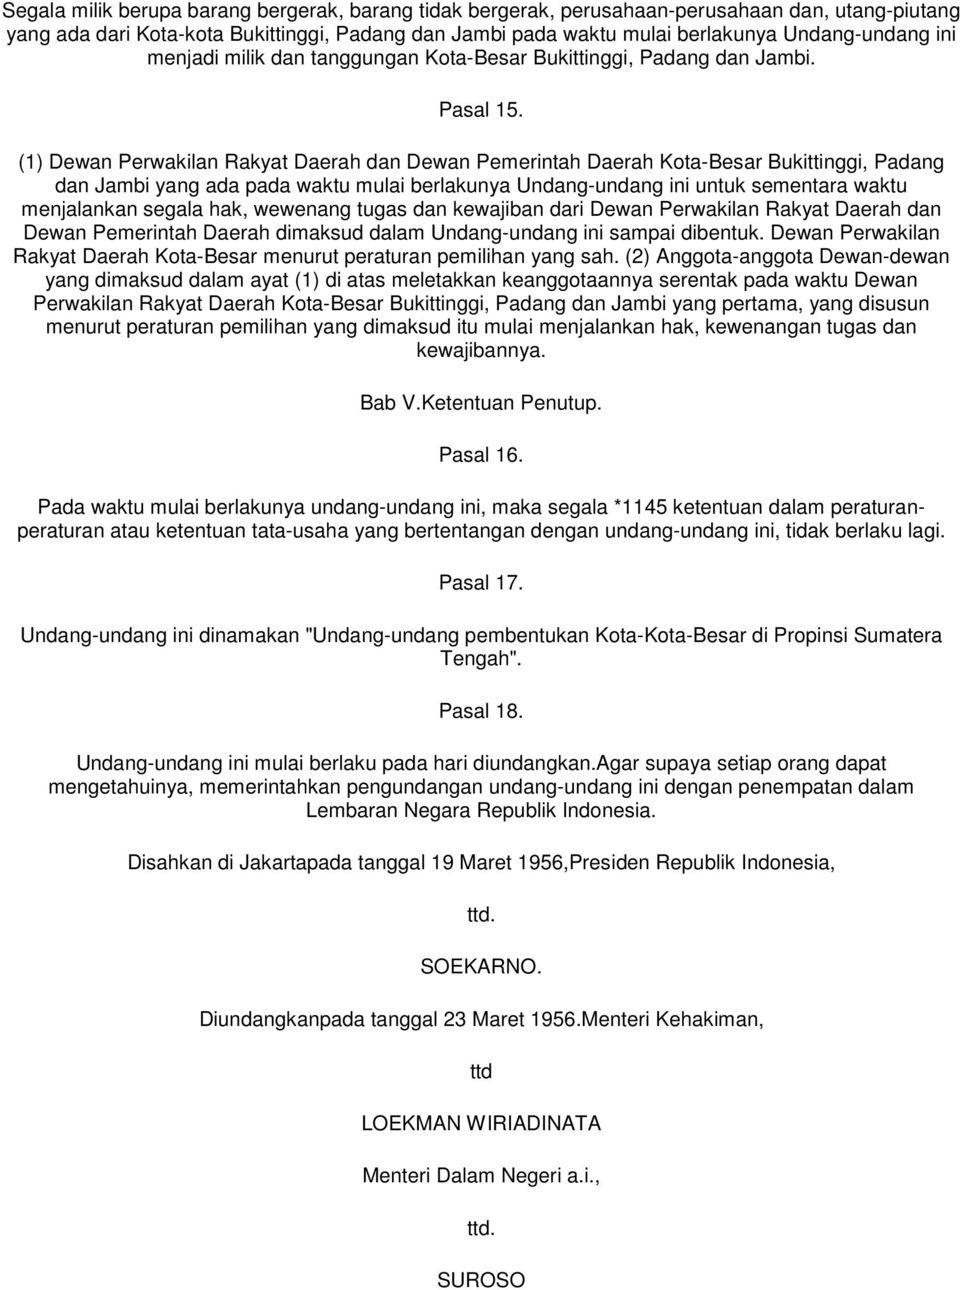 (1) Dewan Perwakilan Rakyat Daerah dan Dewan Pemerintah Daerah Kota-Besar Bukittinggi, Padang dan Jambi yang ada pada waktu mulai berlakunya Undang-undang ini untuk sementara waktu menjalankan segala